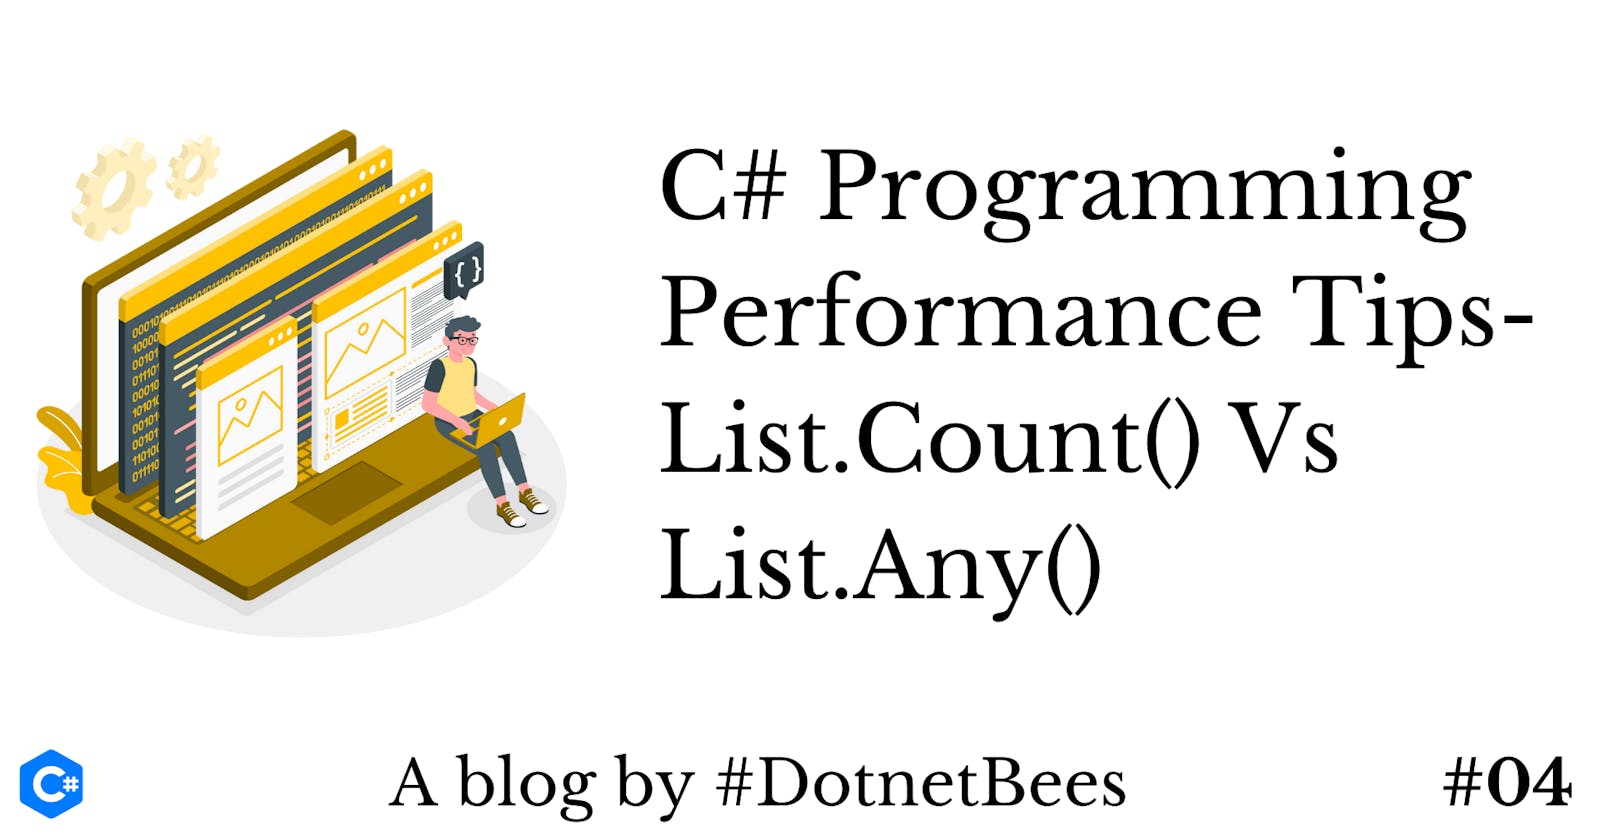 C# Programming Performance Tips - List.Count() Vs List.Any()